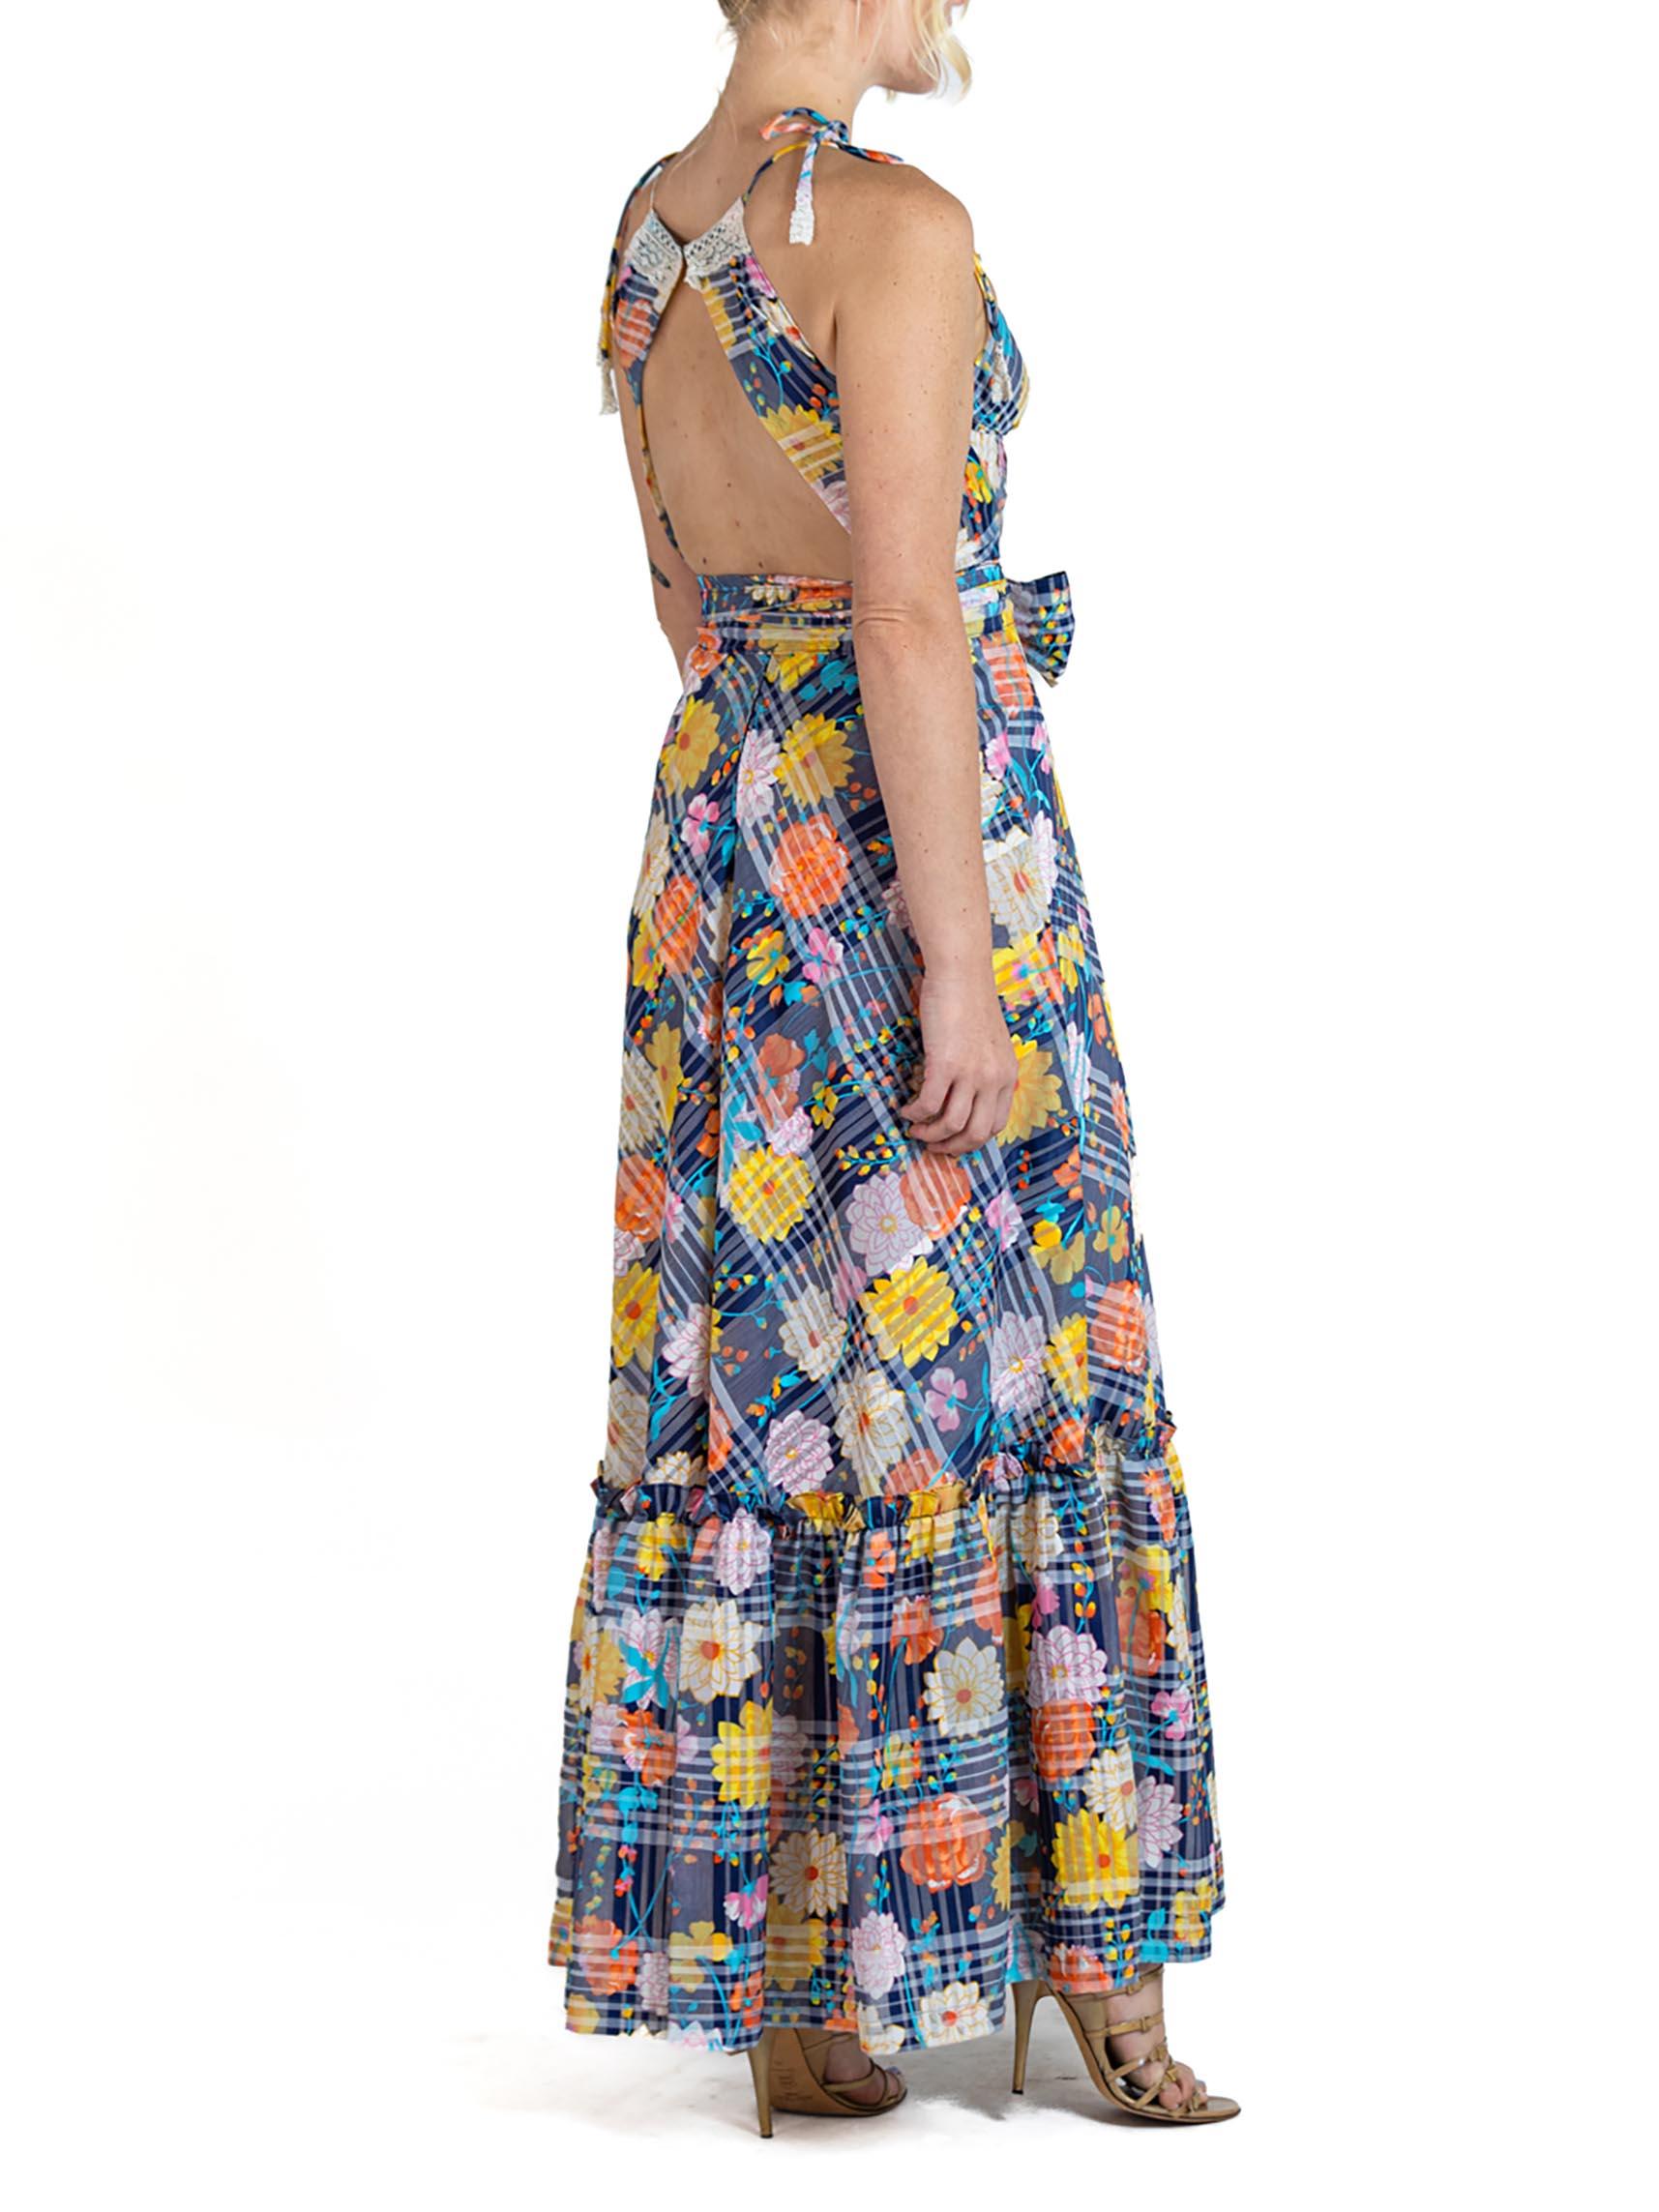 MORPHEW ATELIER Multicolor Blue Floral Backless Cut-Out Summer Dress For Sale 1